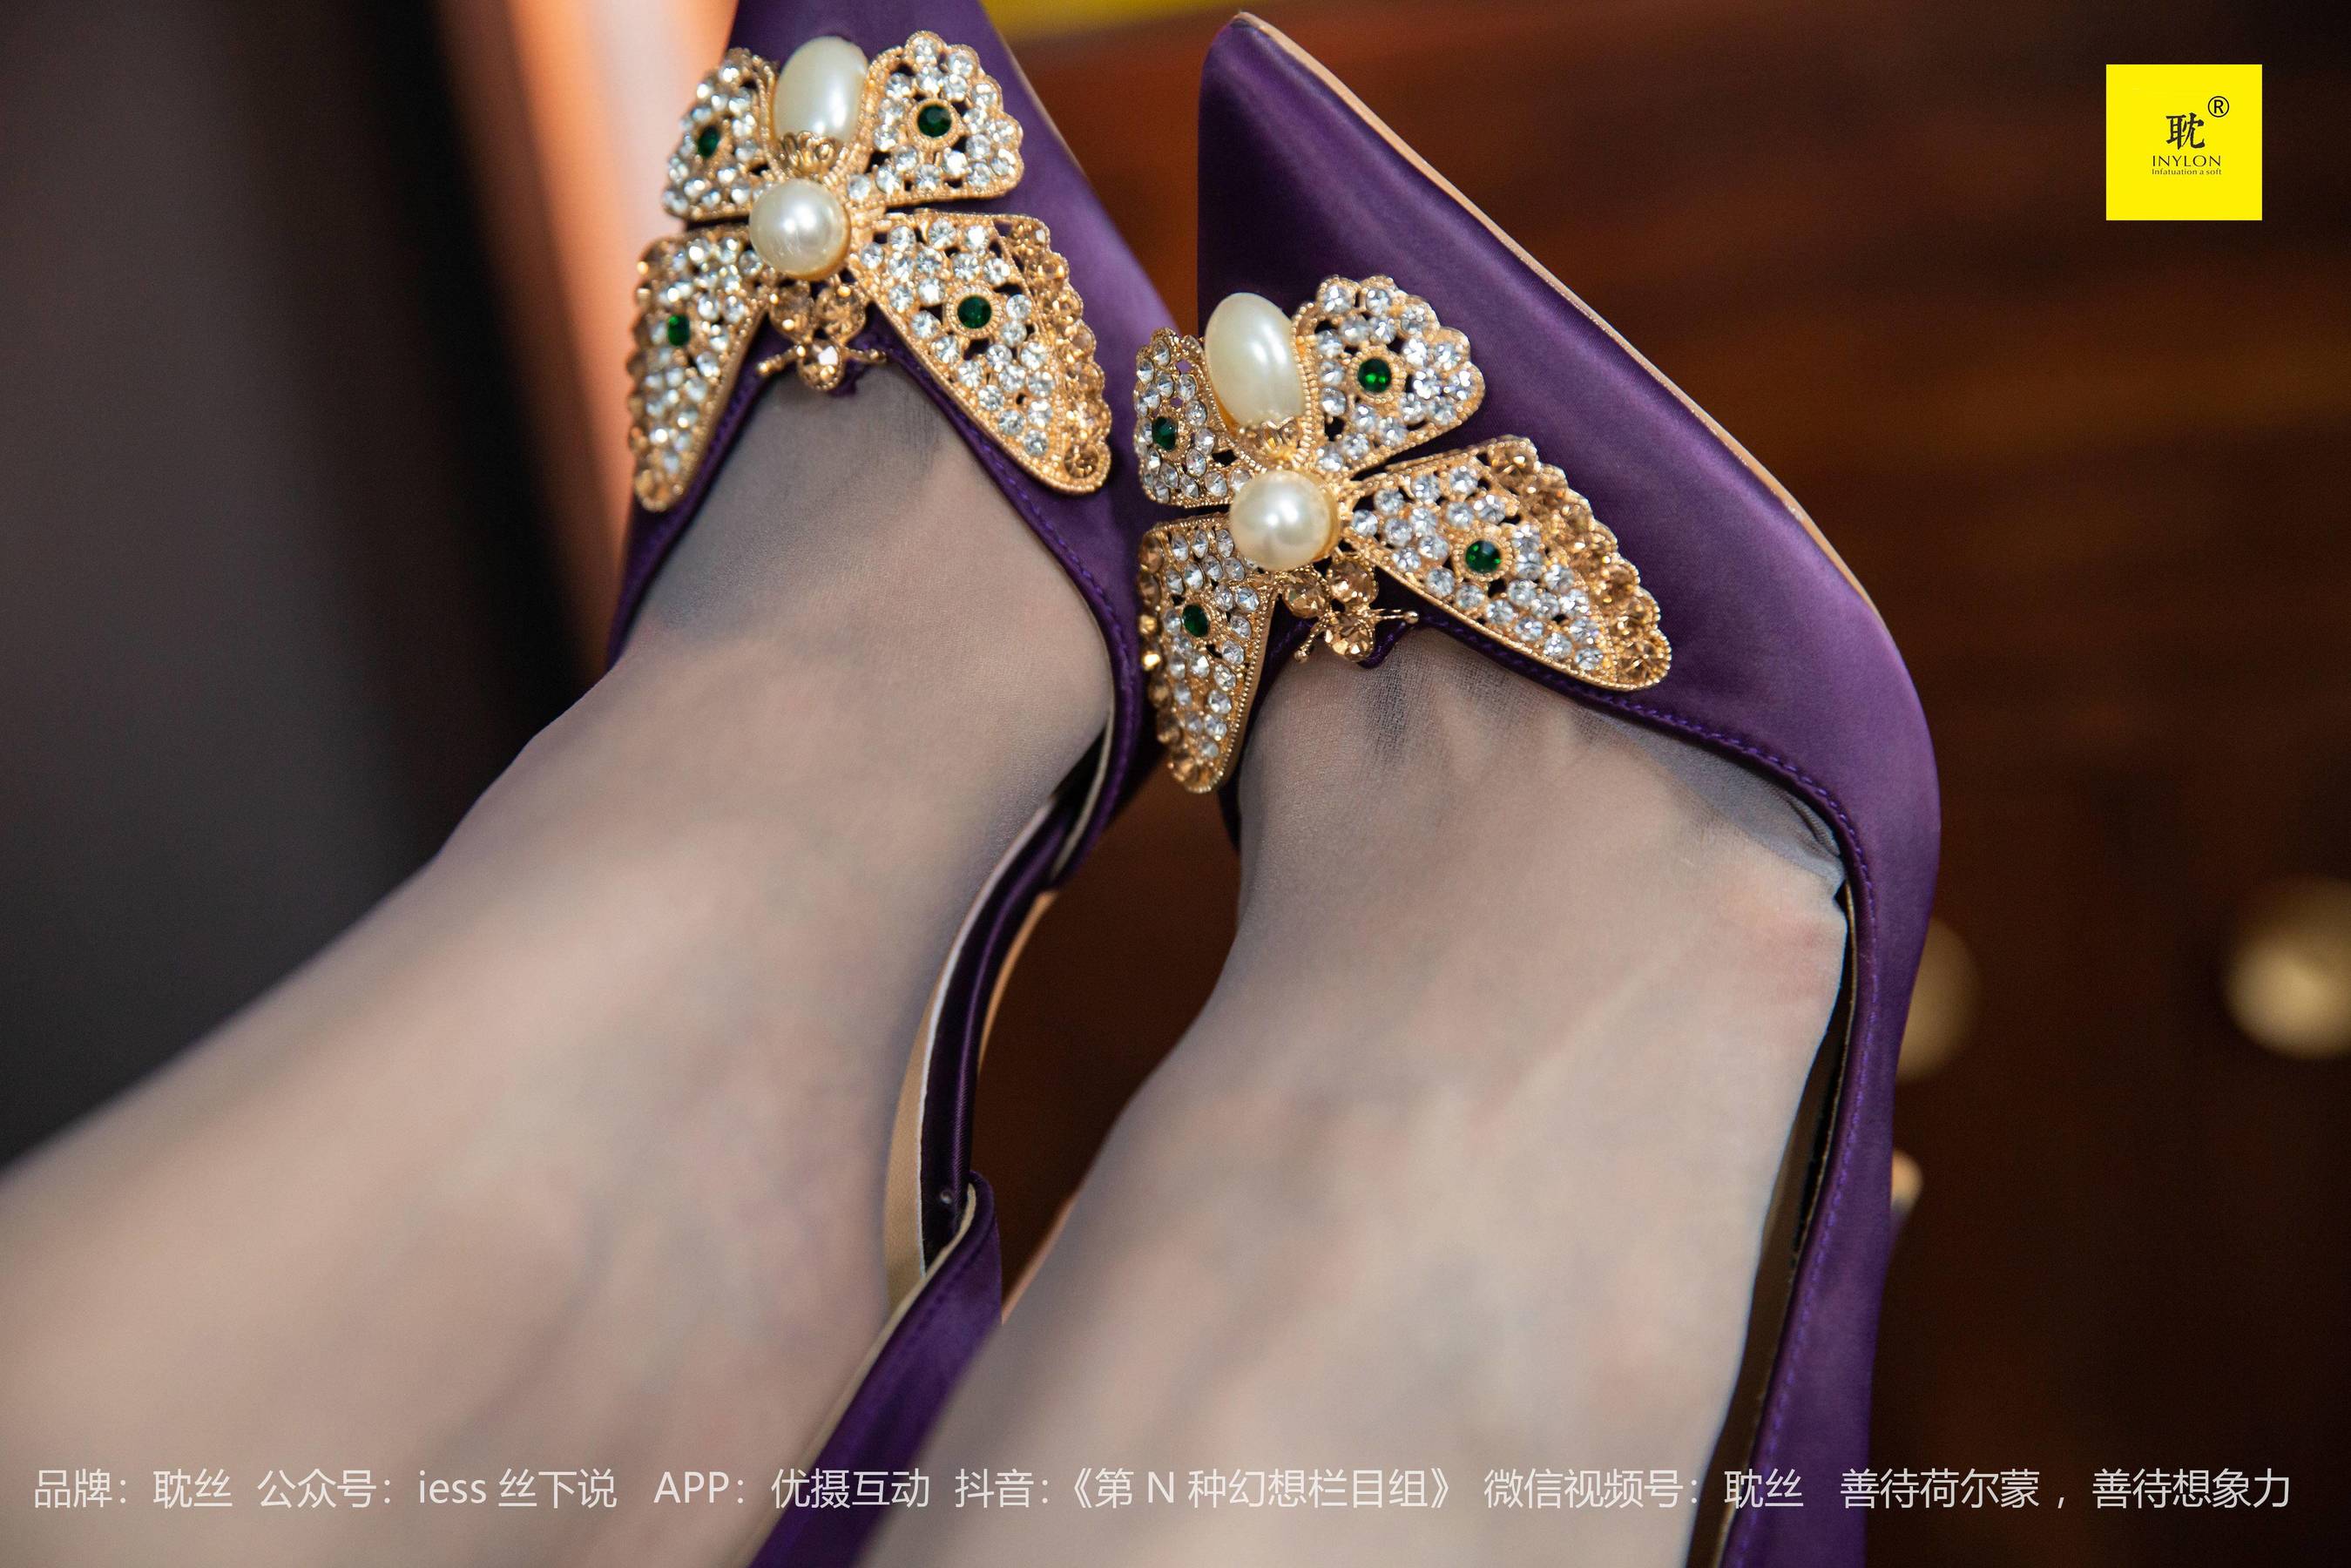 [IESS]《第N种可能》之紫色高跟鞋④ 丘主管 丝袜美腿套图 - 图库库